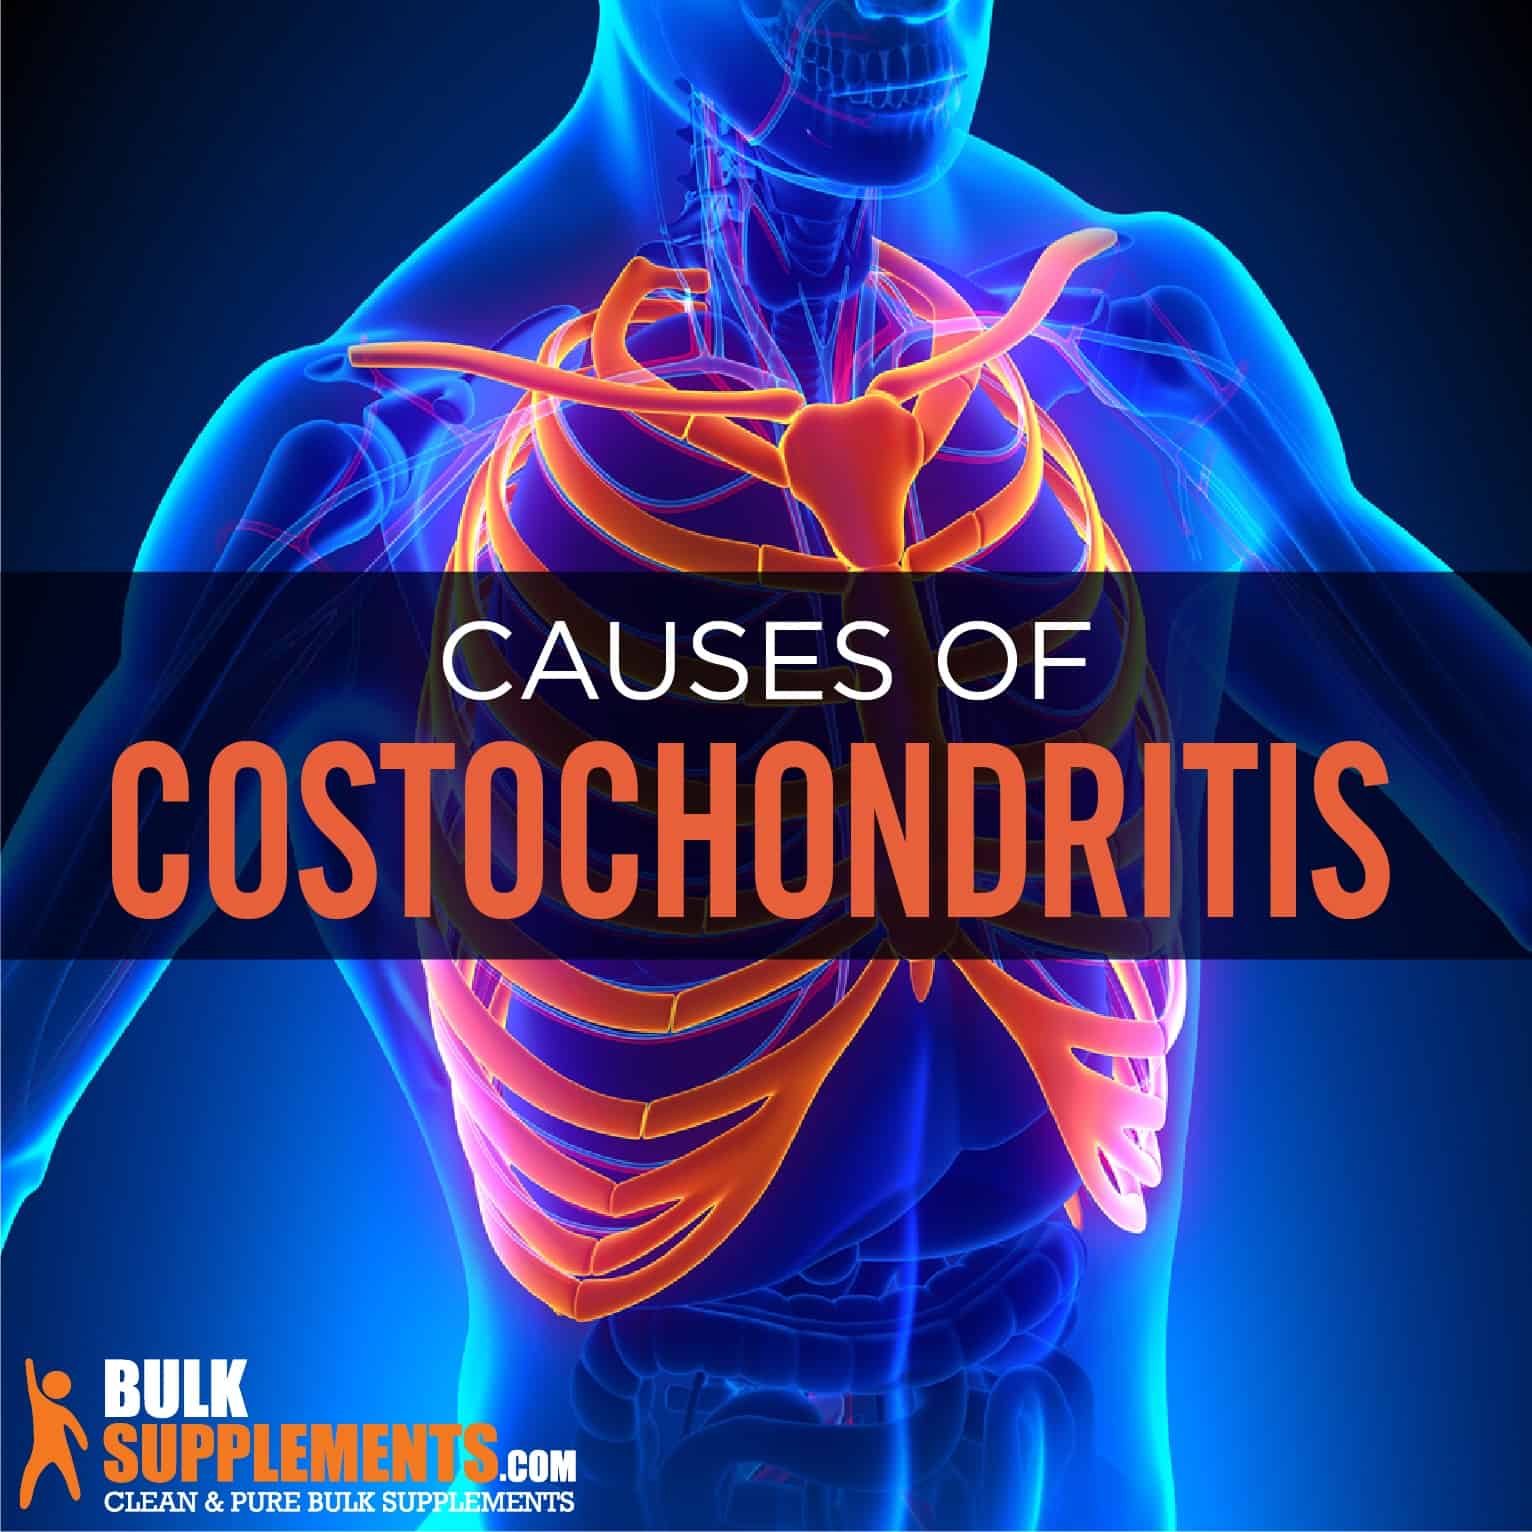 Costochondritis symptoms